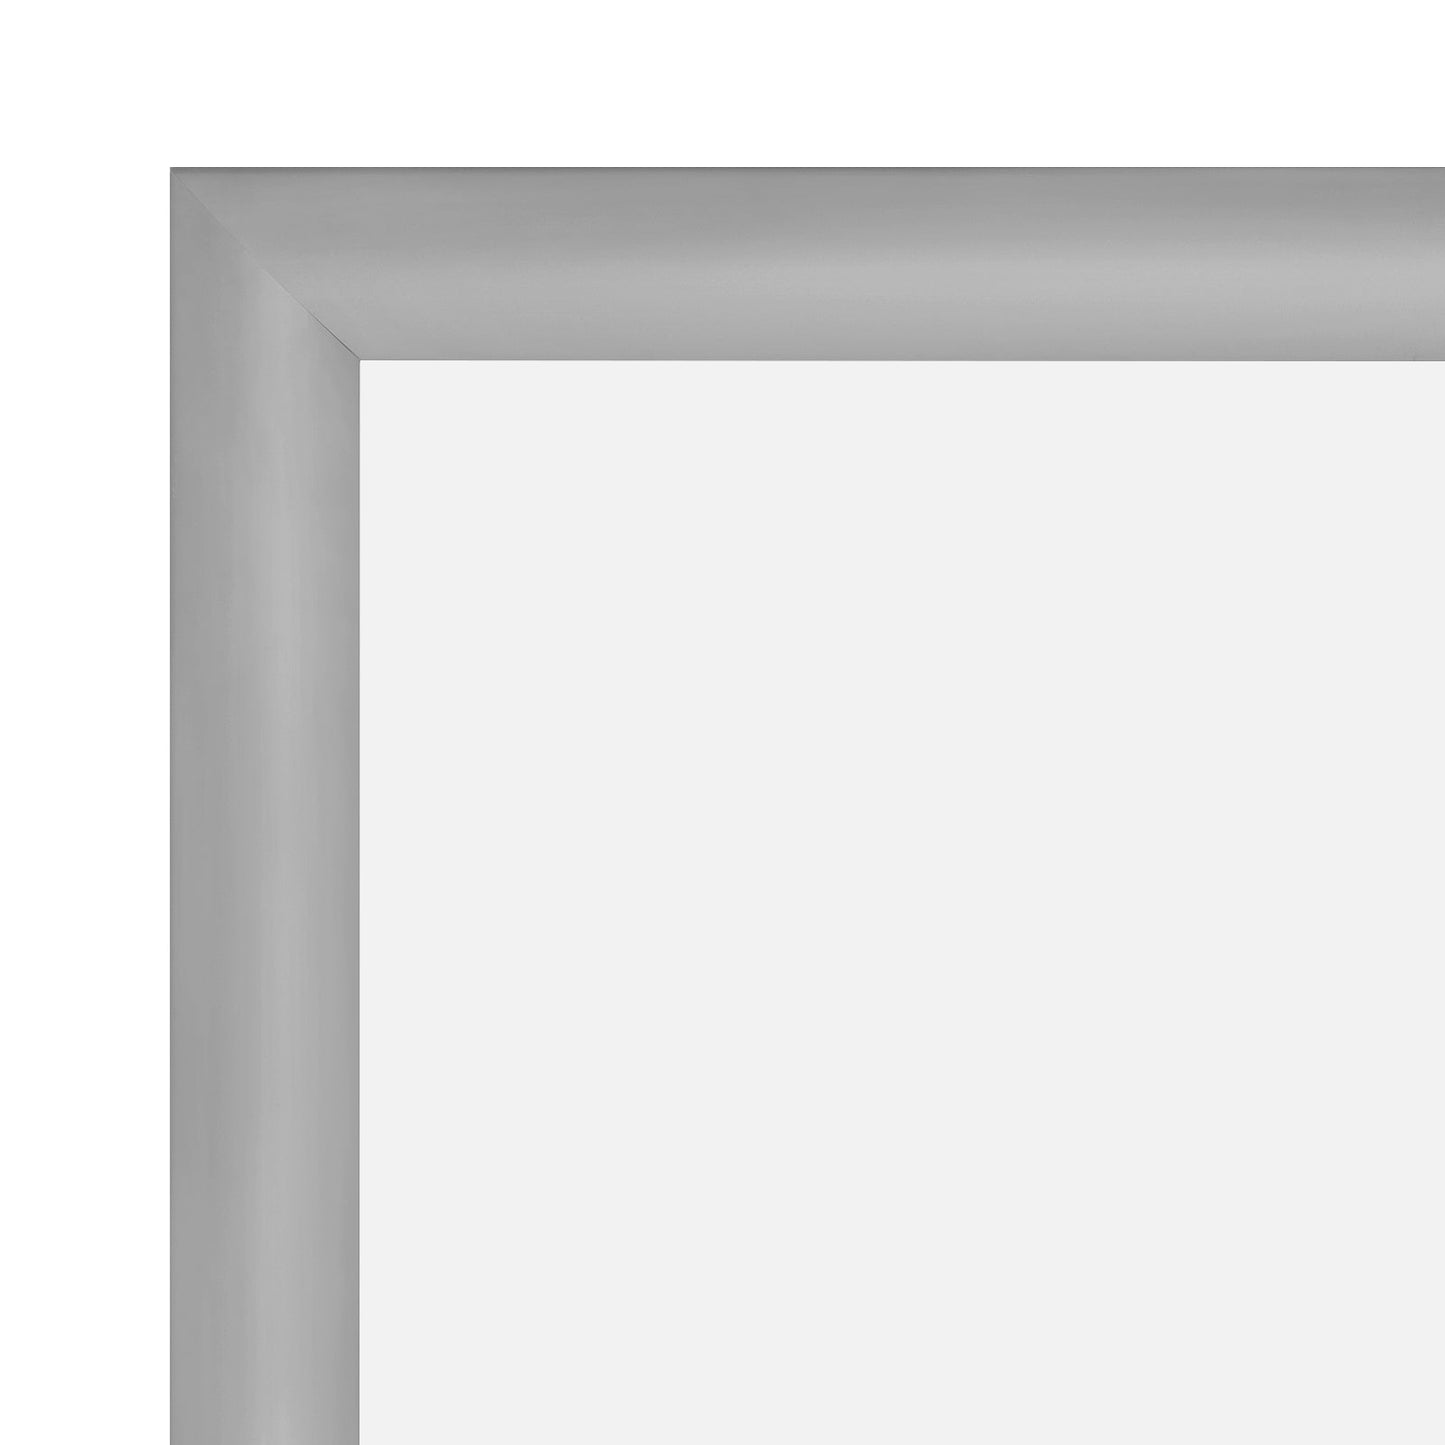 11x16 Silver SnapeZo® Snap Frame - 1.2" Profile